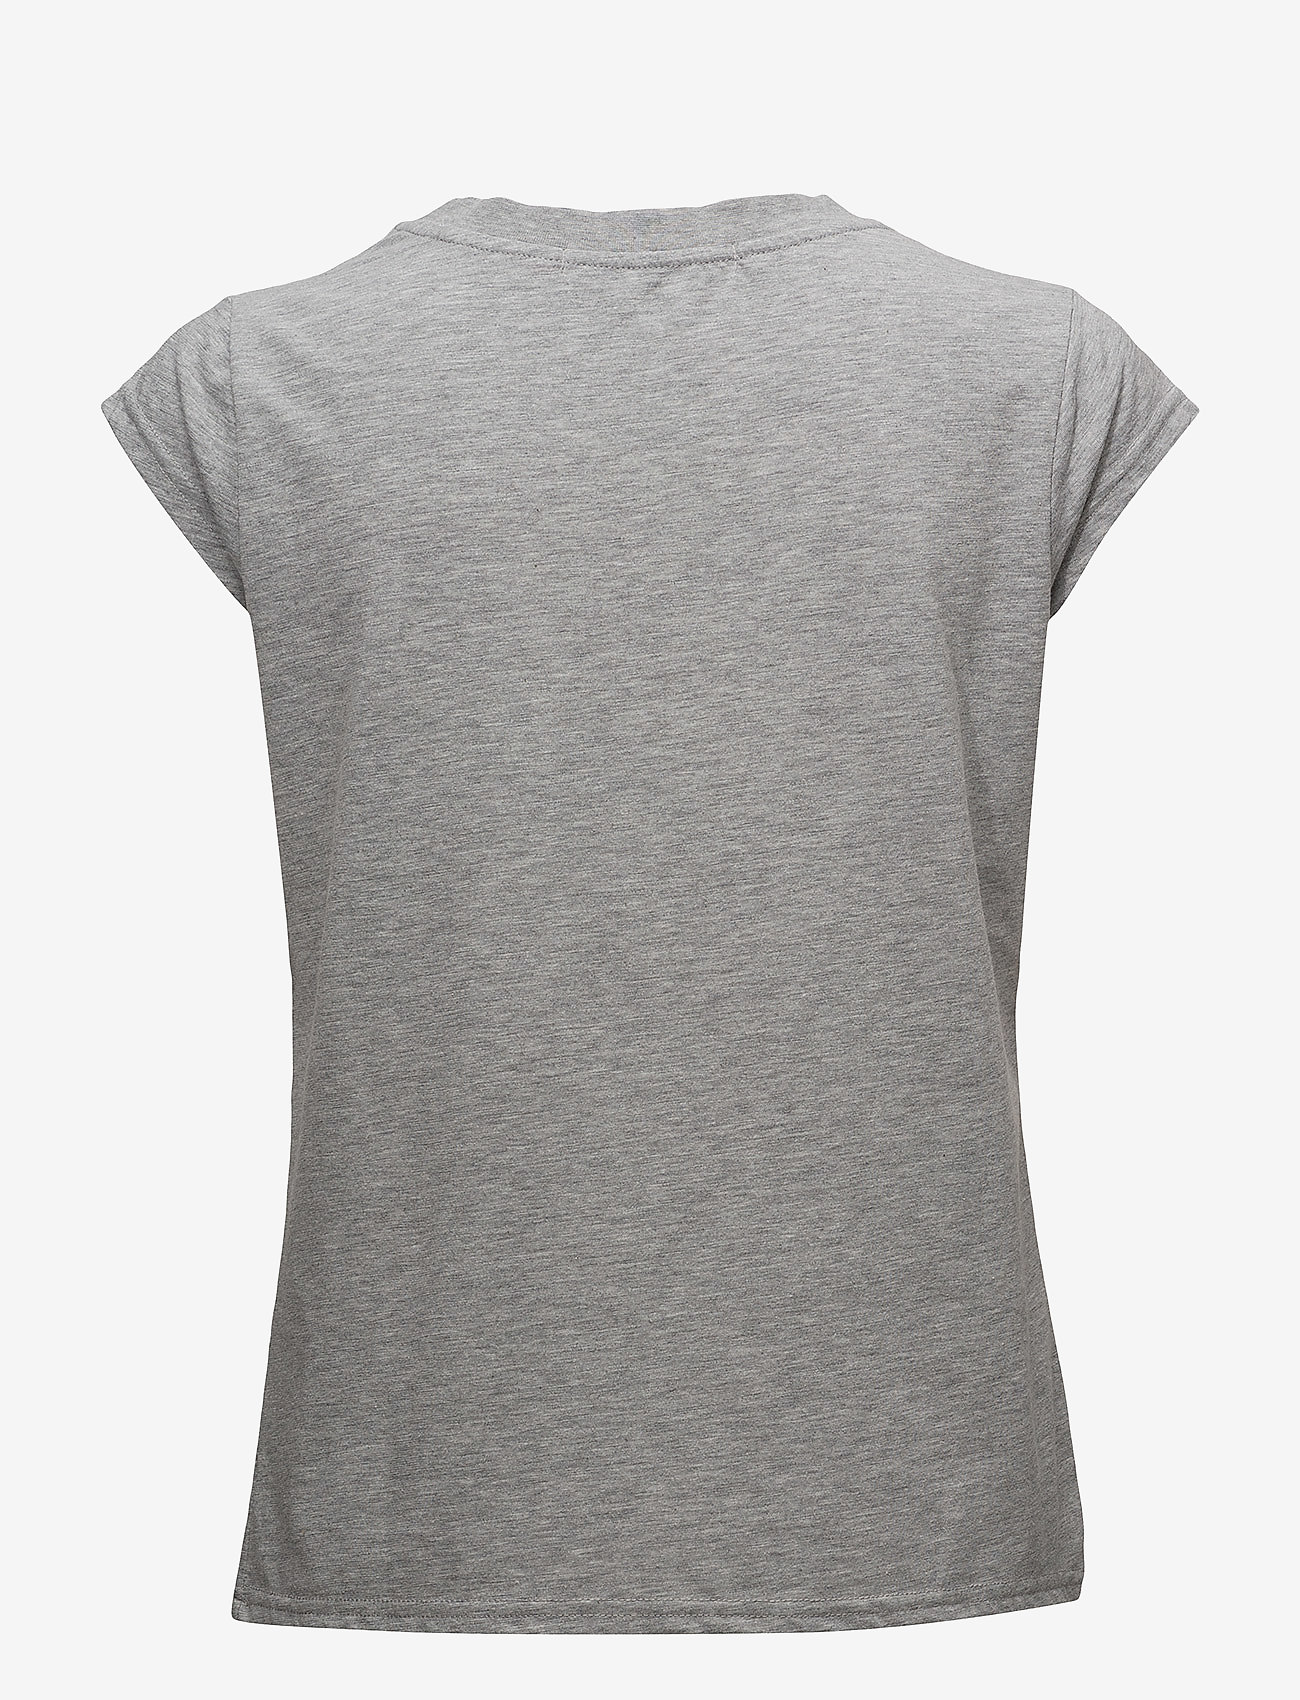 Coster Copenhagen - CC Heart basic t-shirt - lowest prices - light grey melange - 1